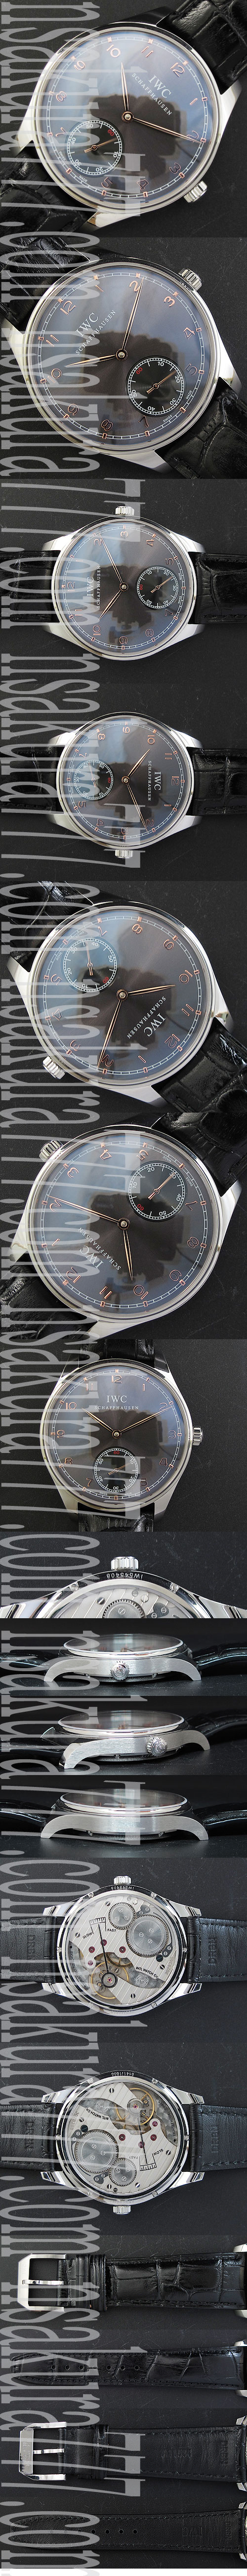 IWC腕時計の説明